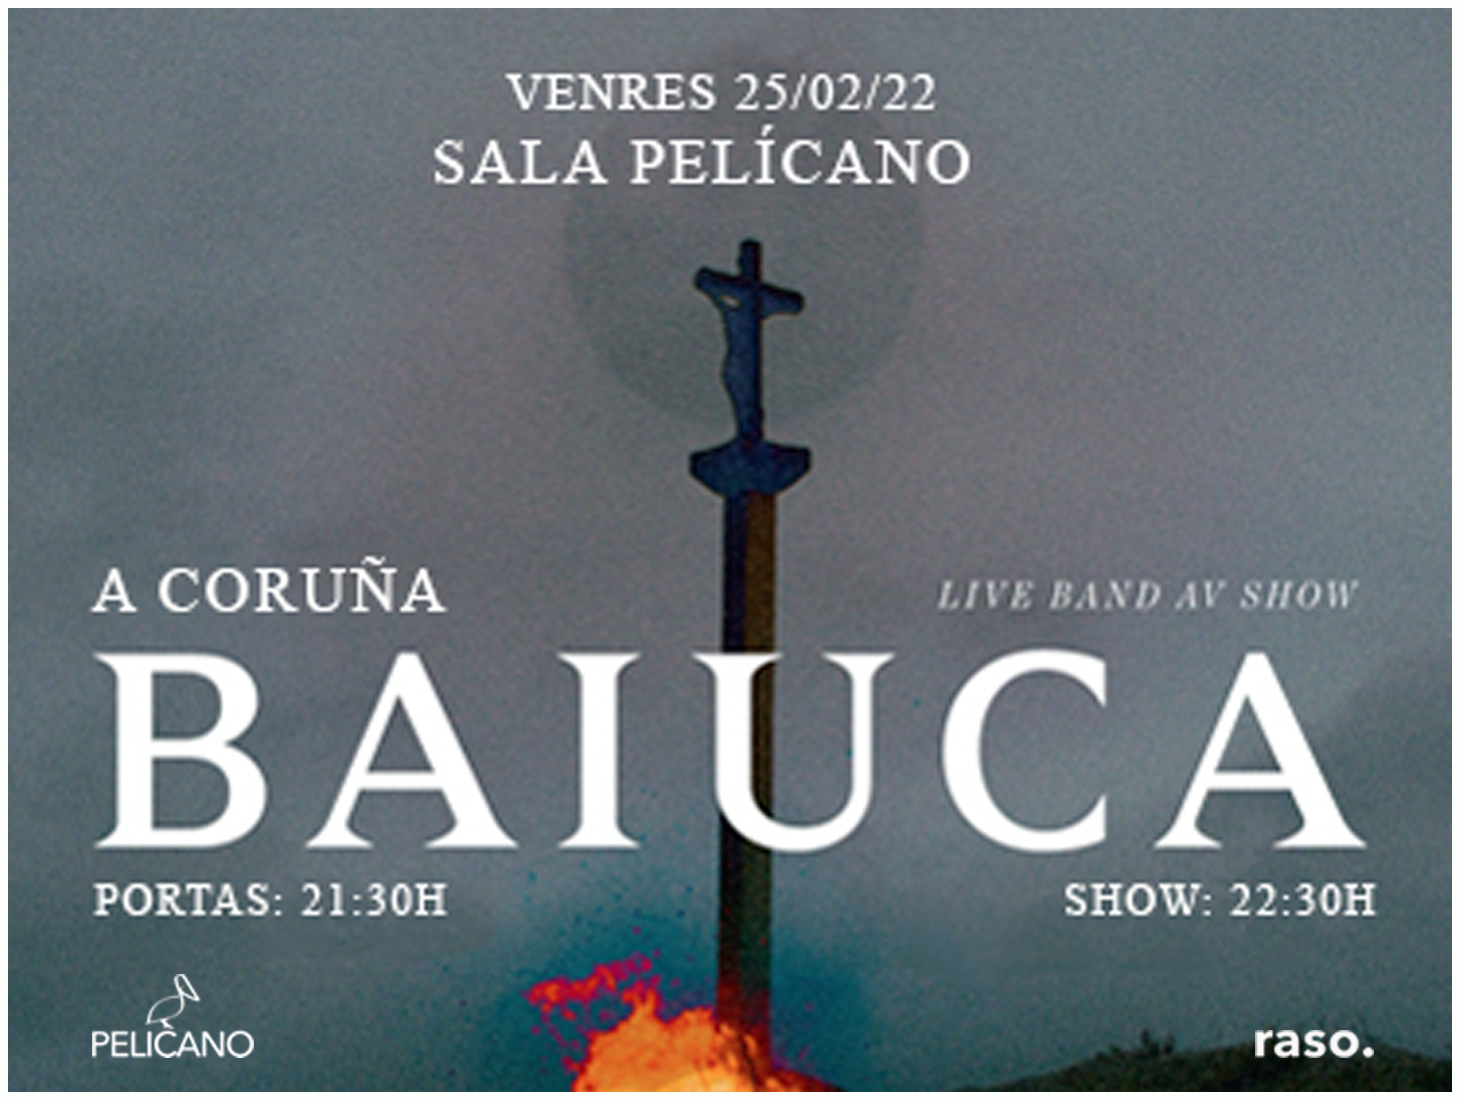 baiuca-61a4cad416f486.29066825.jpeg